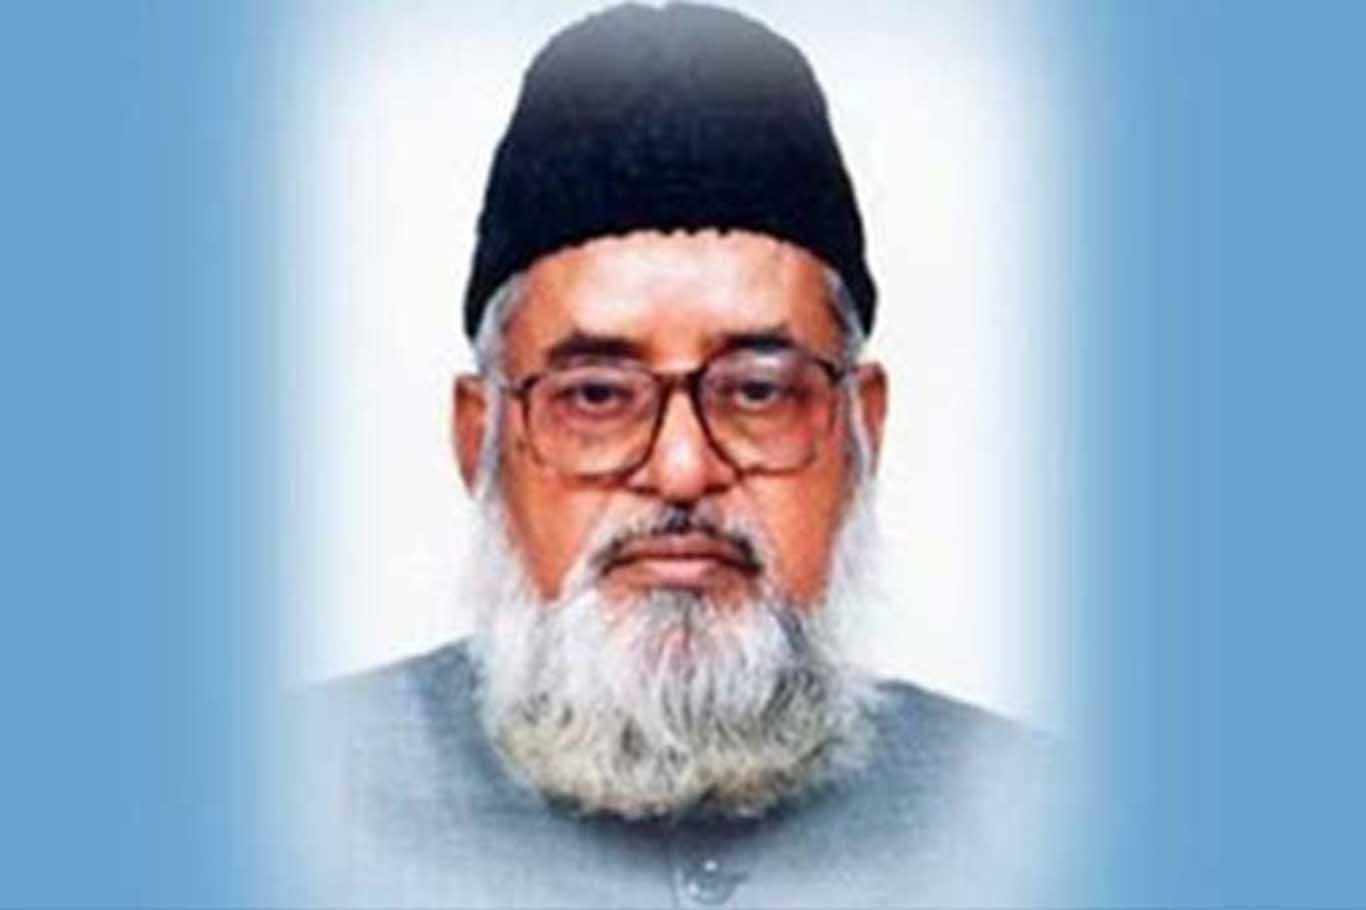 Bangladesh Jamaat-e-Islami leader Maulana Abdus Subhan dies in prison